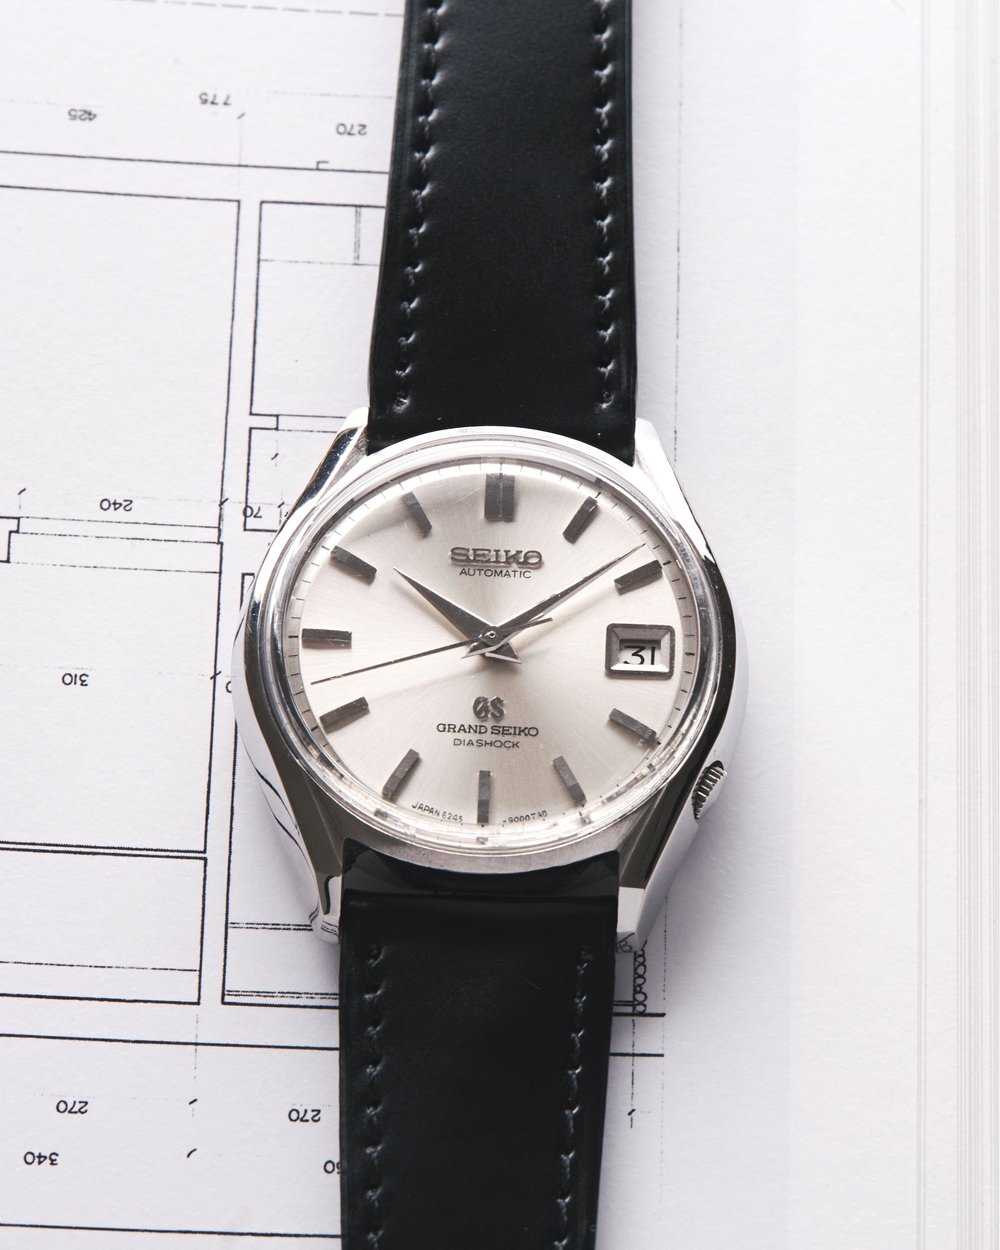 Grand Seiko 62GS ref. 6245-9000 — Those Watch Guys